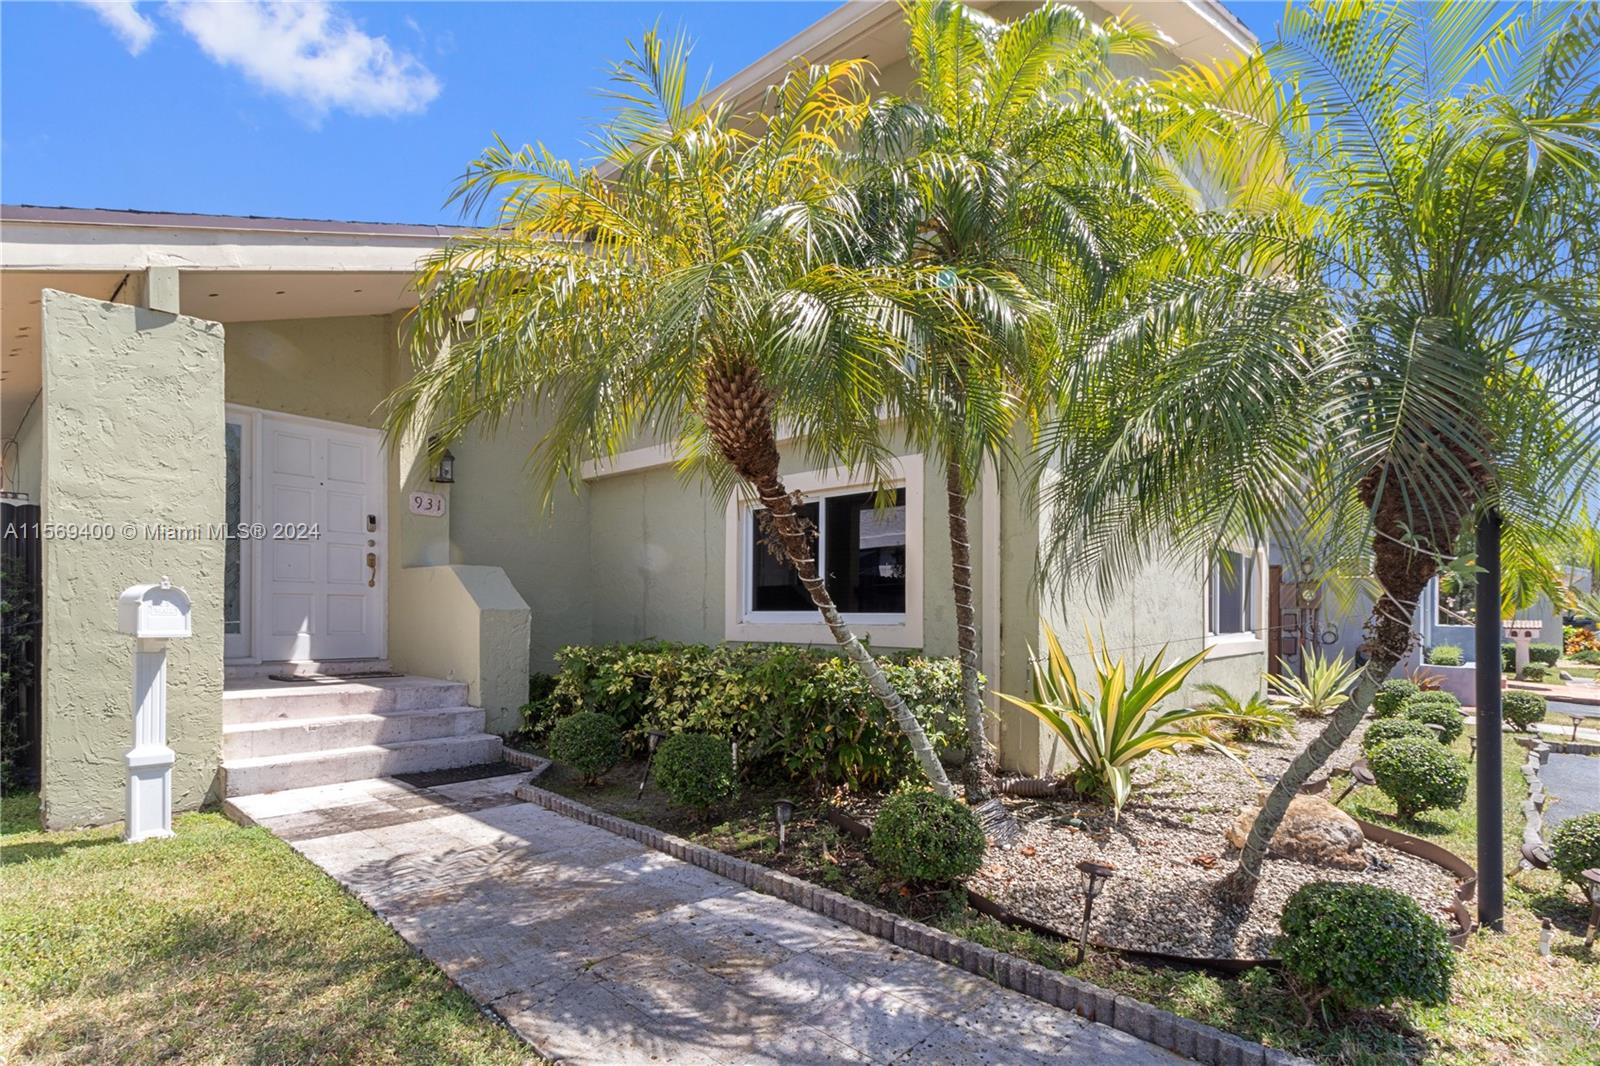 Property for Sale at 931 Nw 106th Ave Cir Cir, Miami, Broward County, Florida - Bedrooms: 3 
Bathrooms: 2  - $649,999